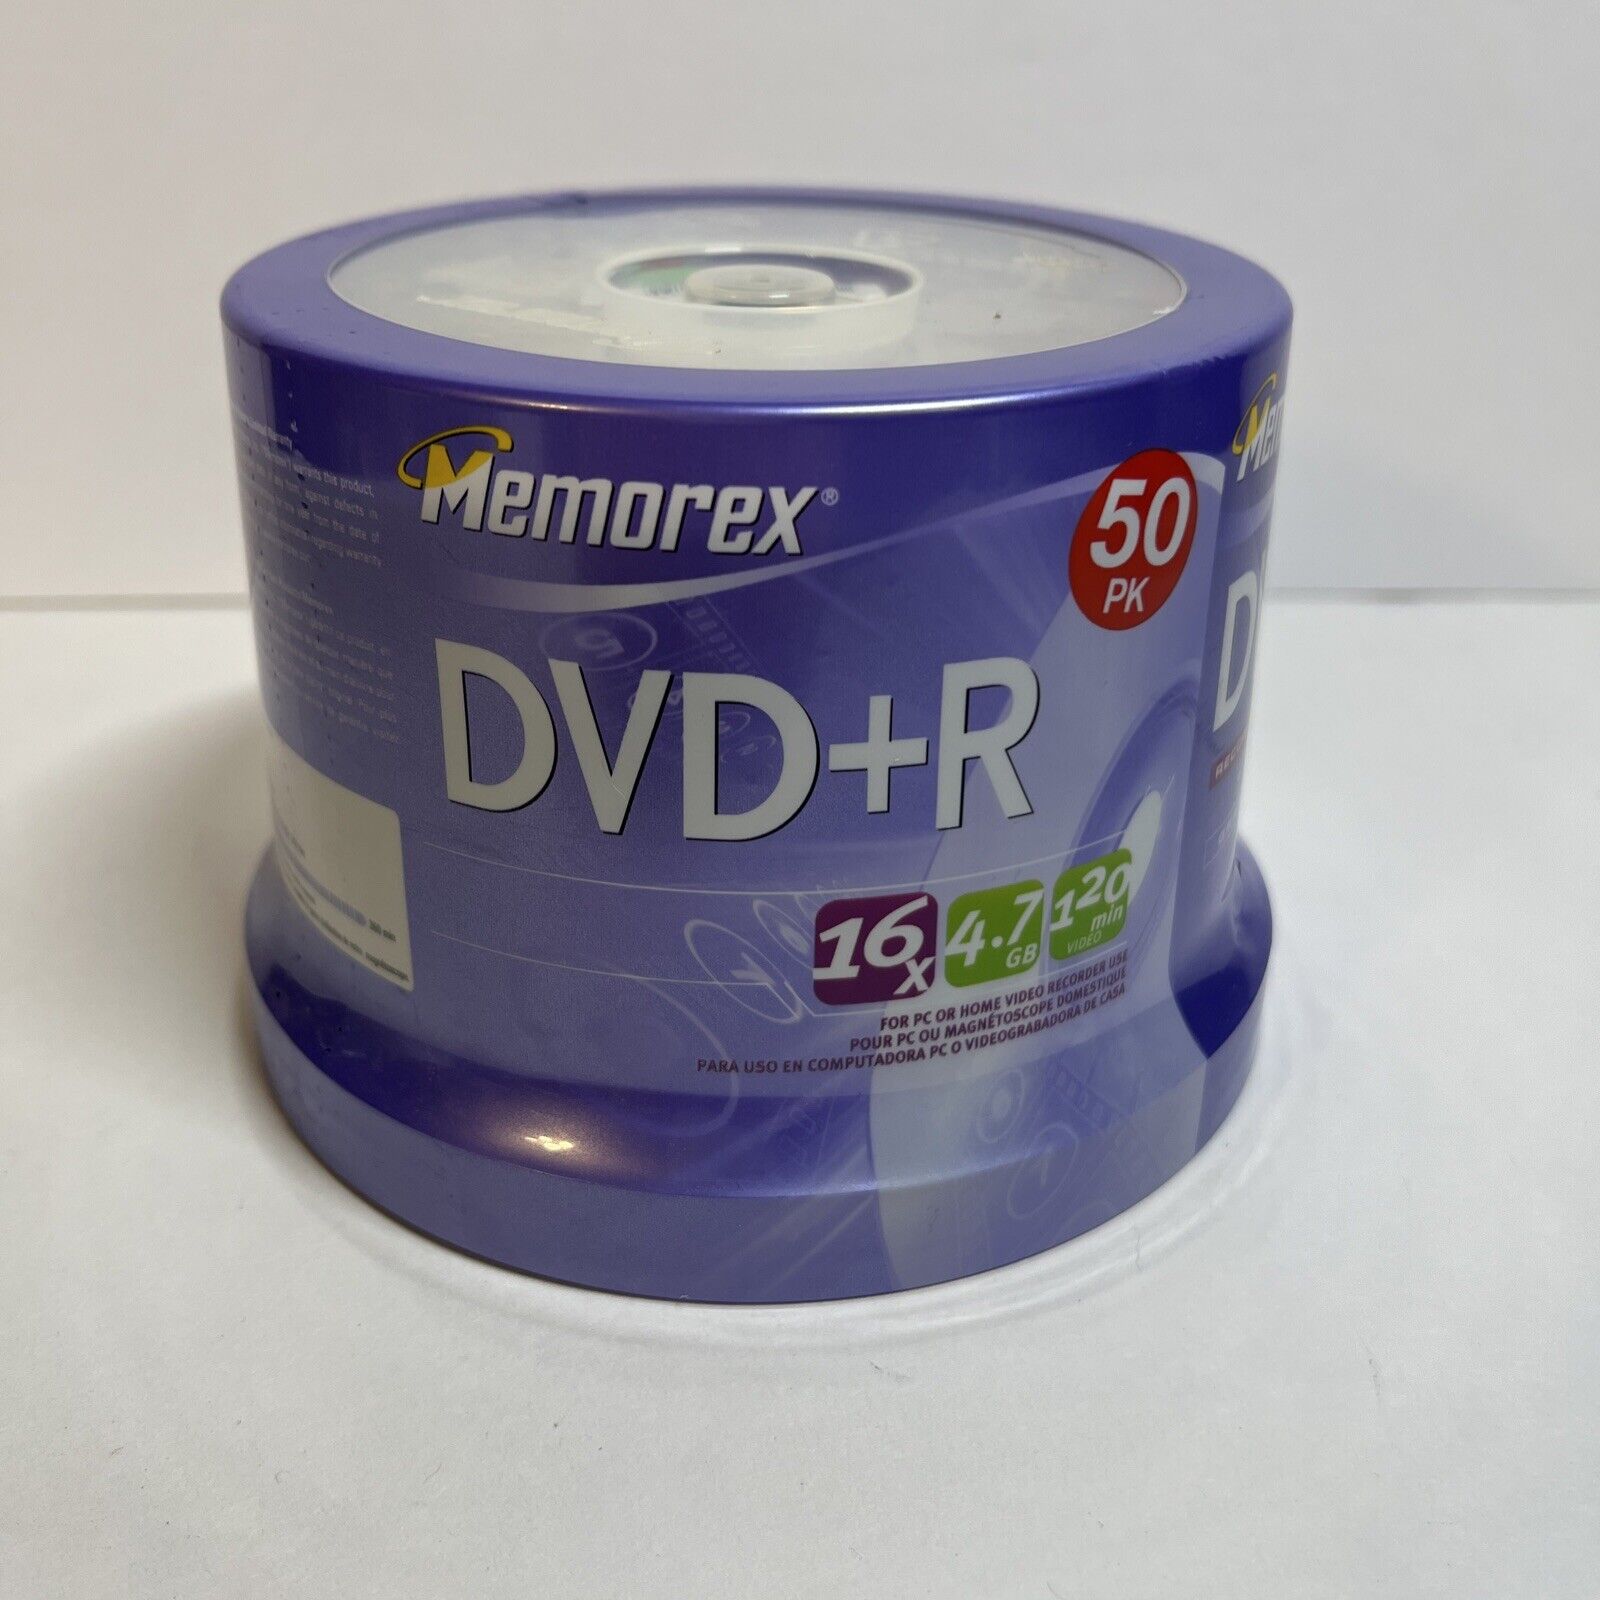 Memorex DVD+R 16x 4.7GB 120 min, 50 Pack [Brand New]